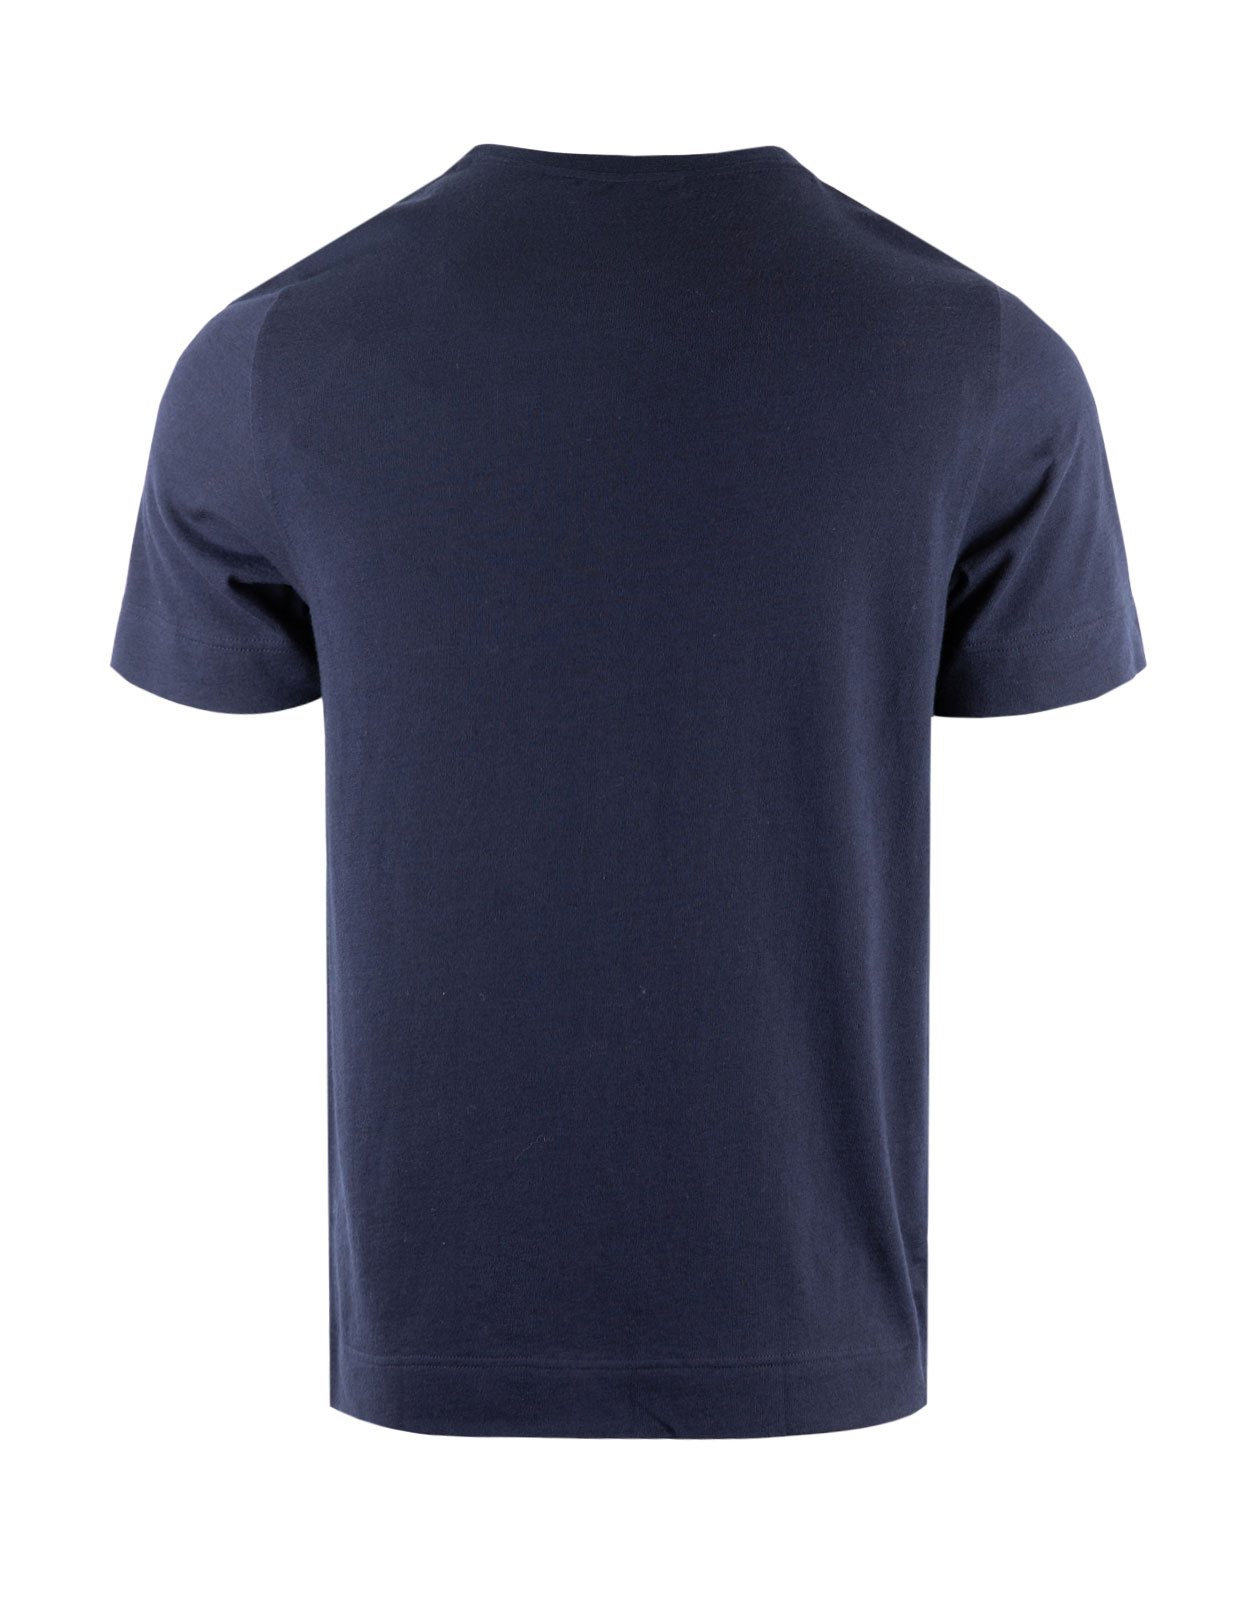 T-Shirt Bomull/Cashmere Navy